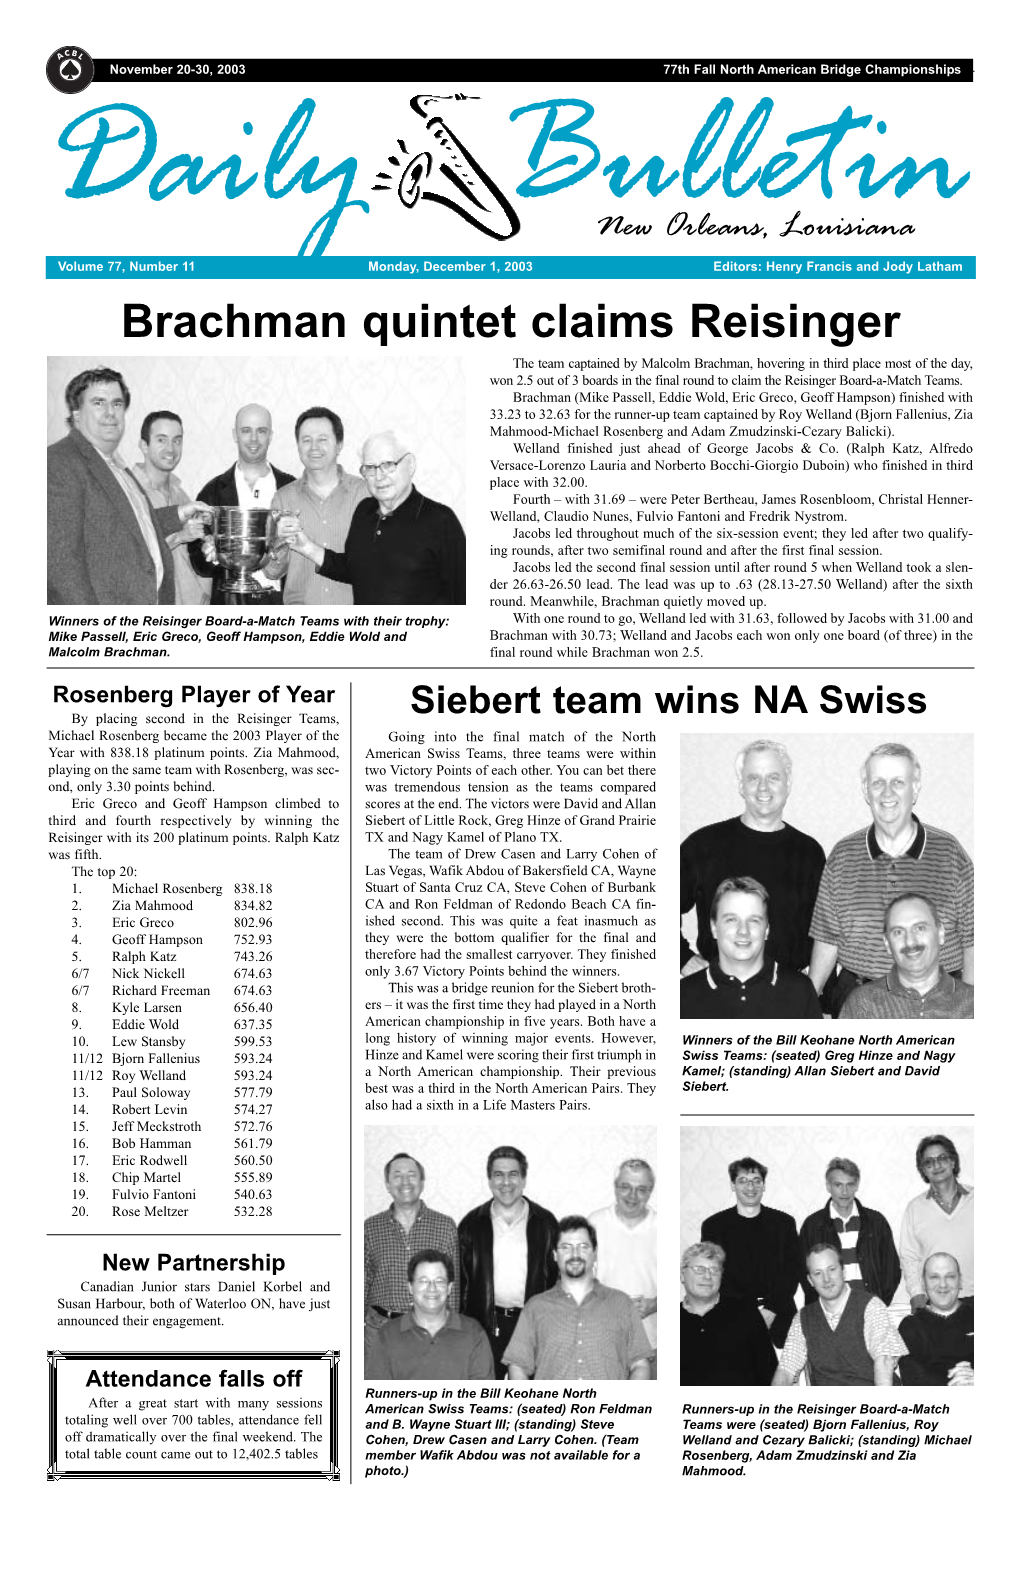 Brachman Quintet Claims Reisinger